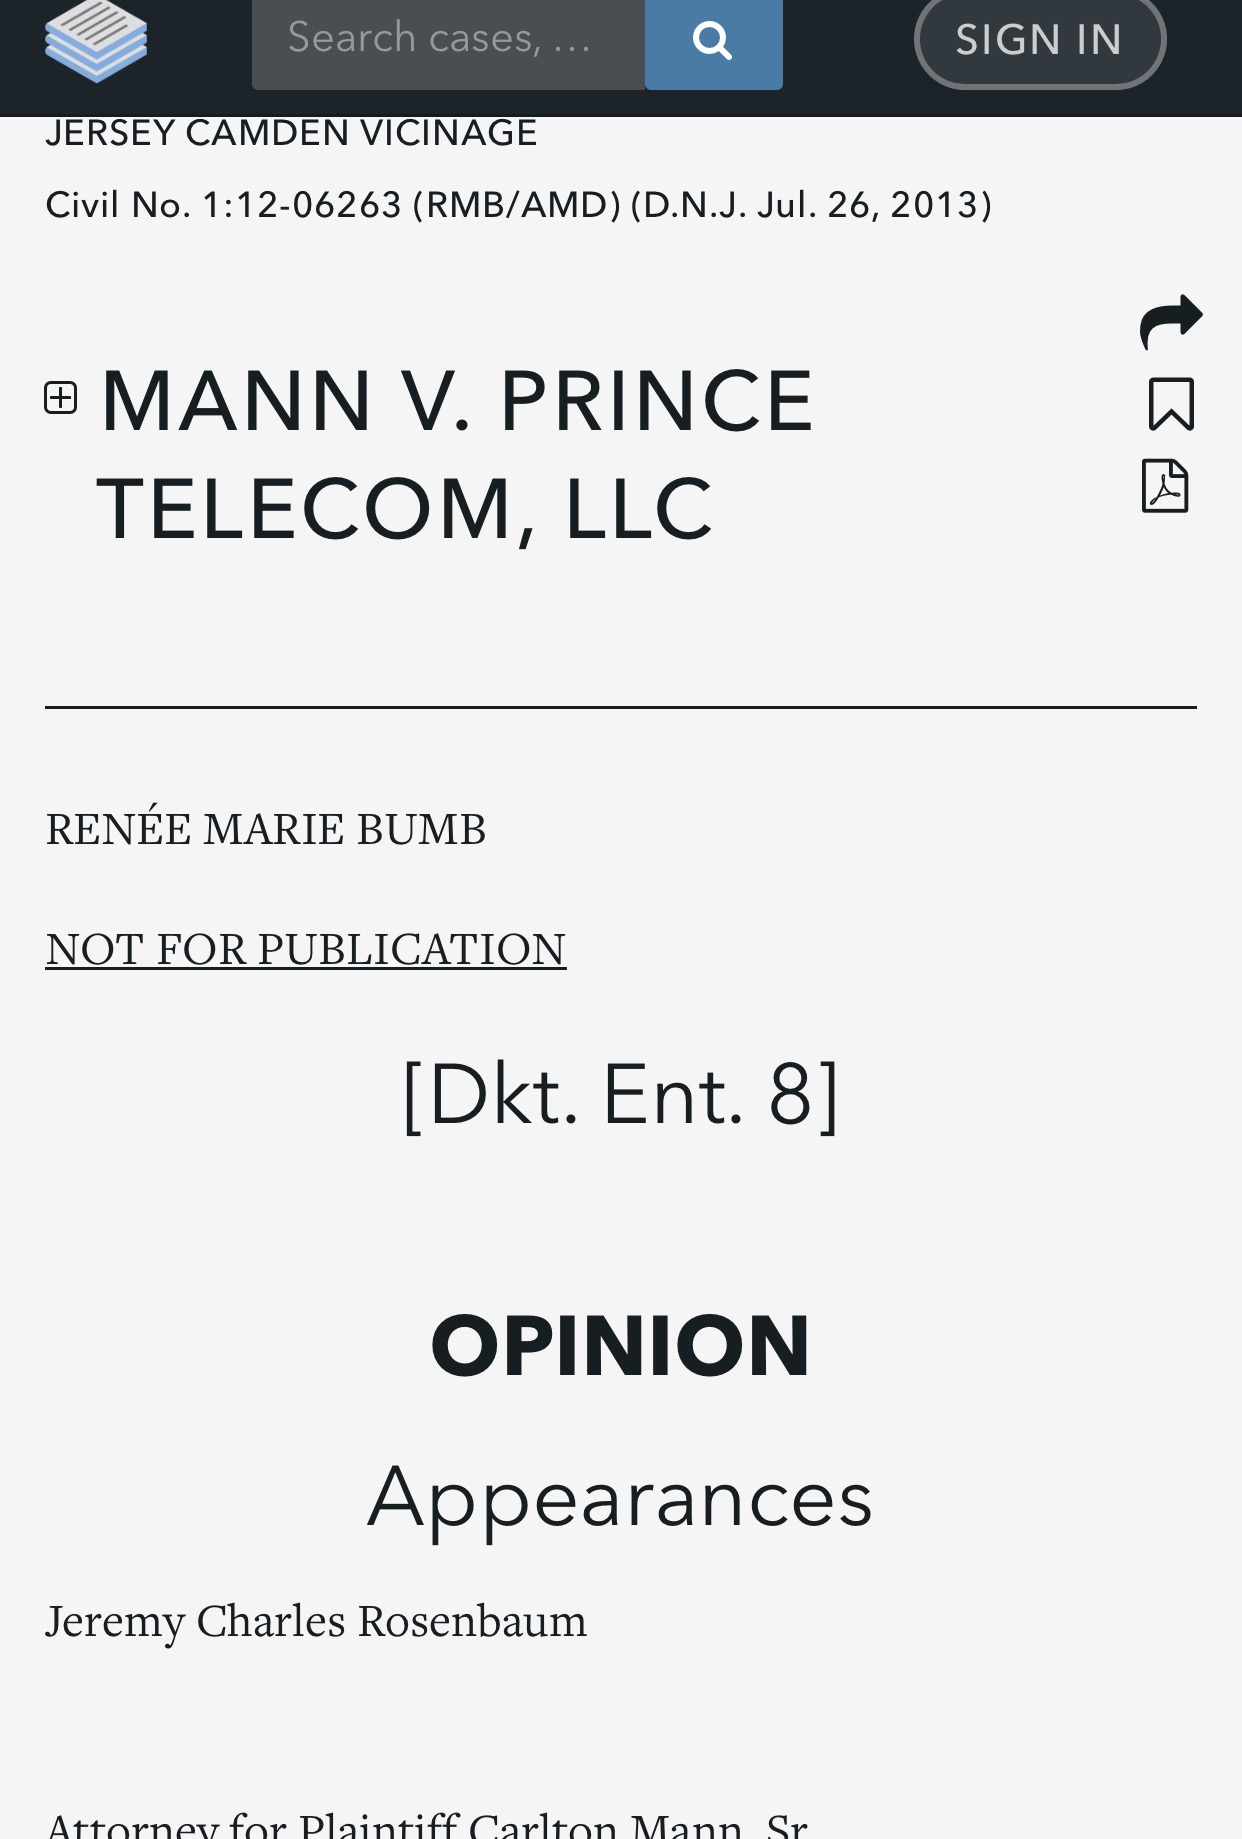 Racial Discrimination Law Suit against Prince Telecom https://casetext.com/case/mann-v-prince-telecom